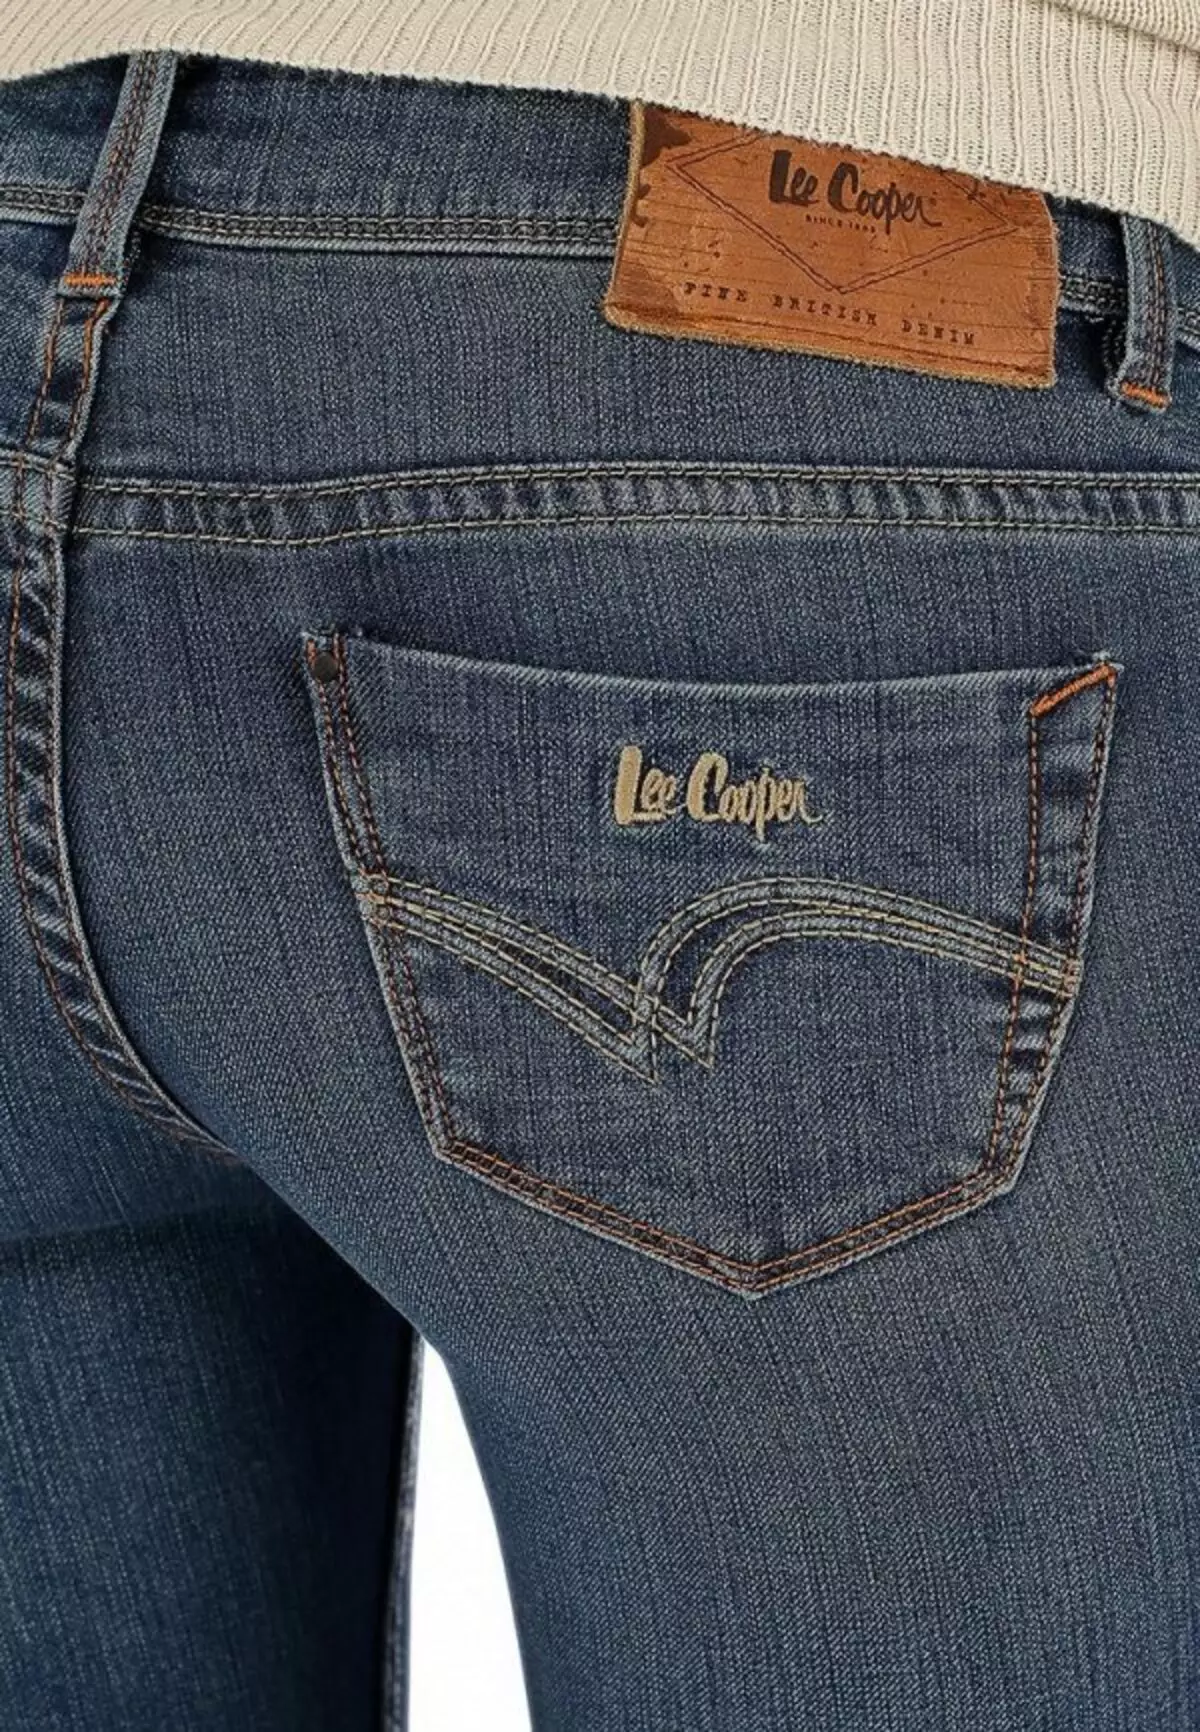 Li Cooper Jeans (46 fotosurat): Ayol modellari o'lchovli va sharhlar 1093_37